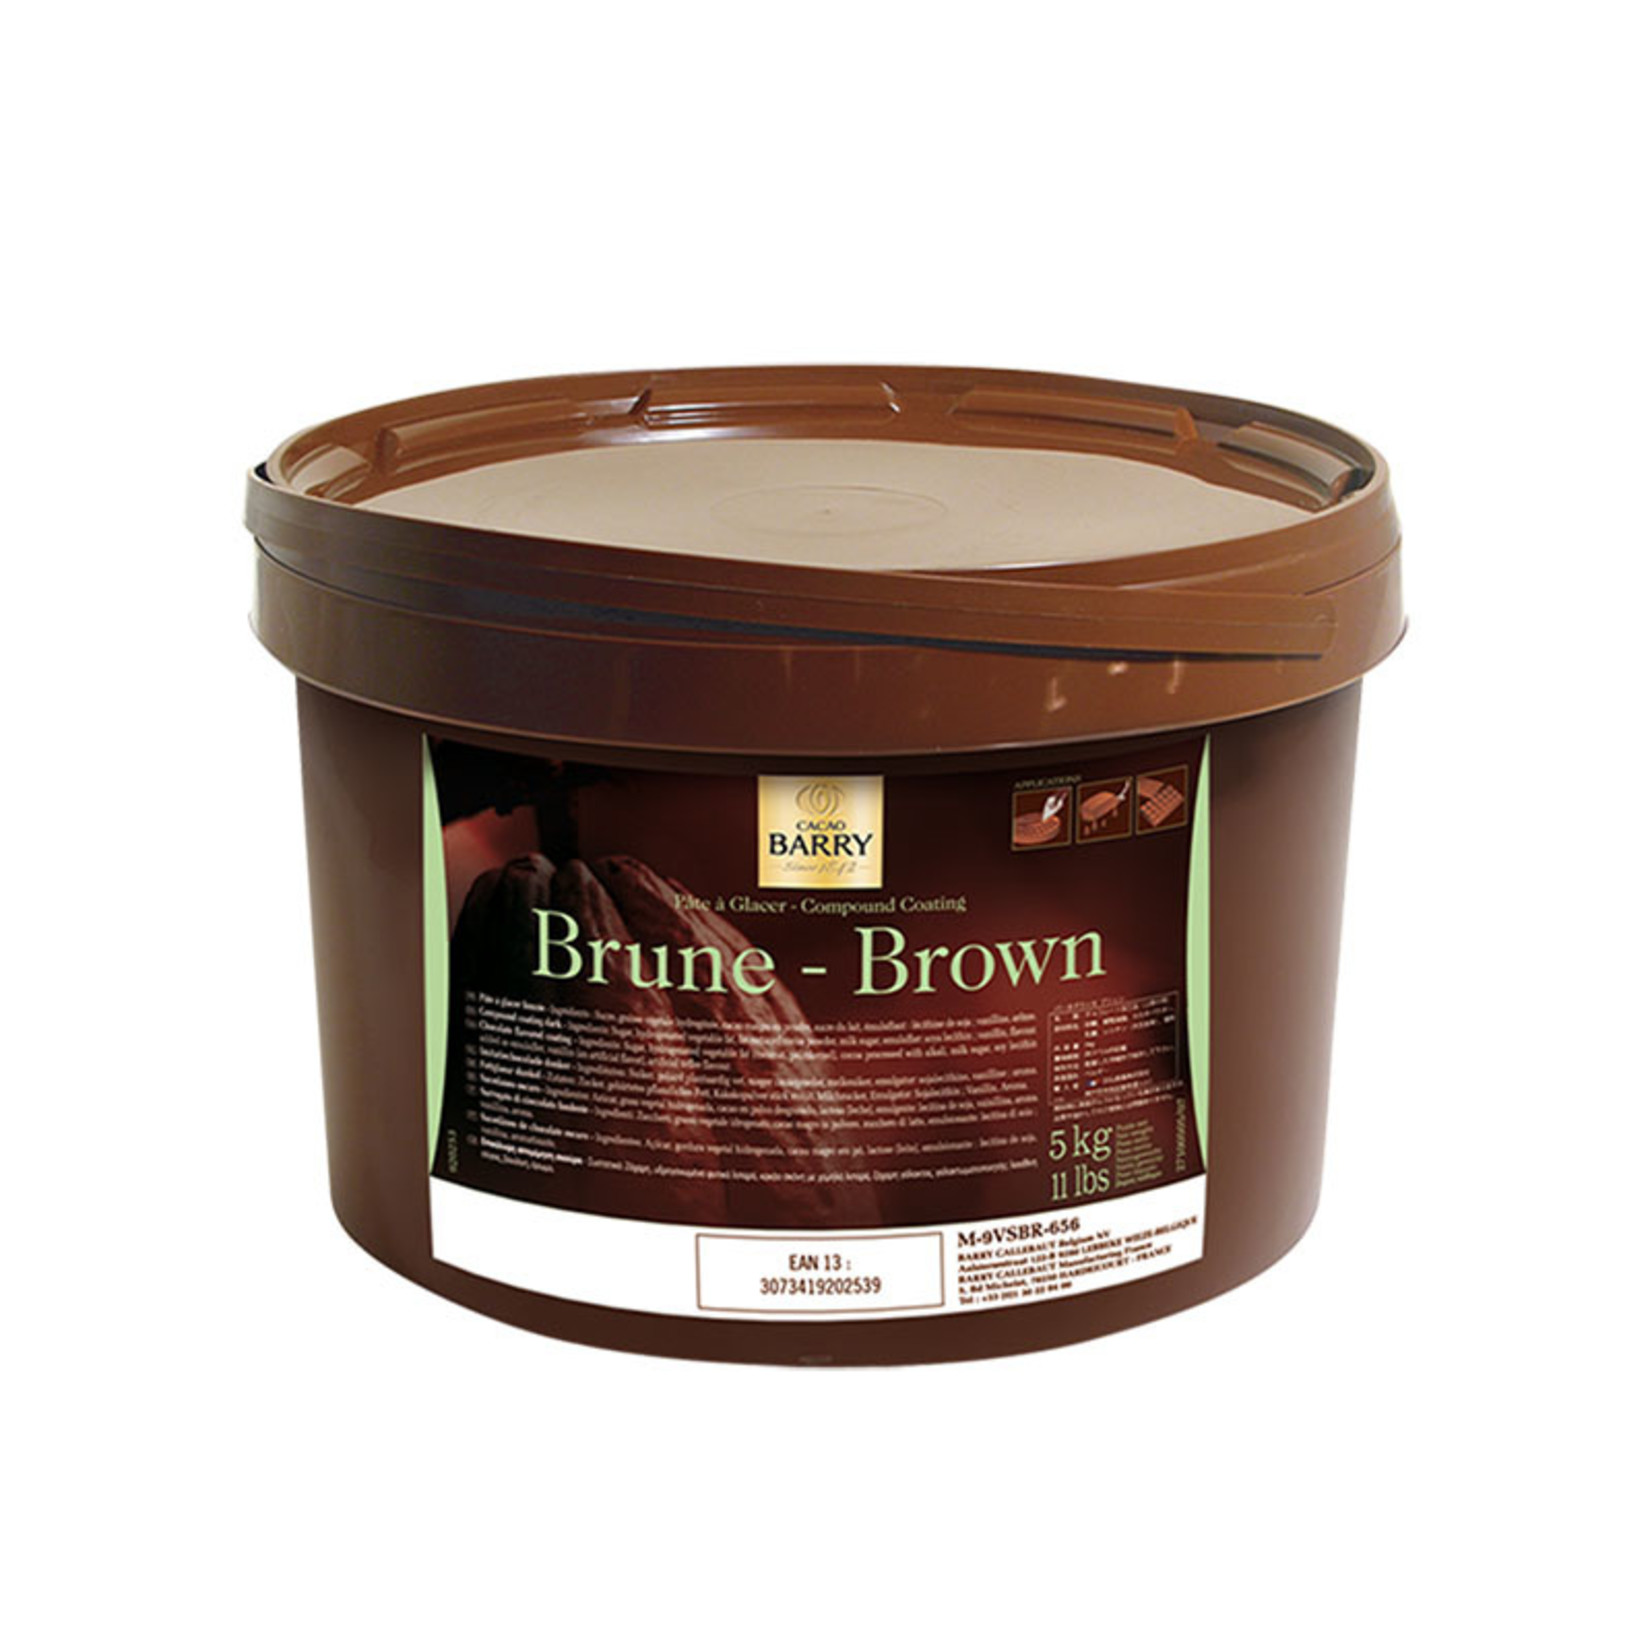 Cacao Barry Cacao Barry - Pate Glacer Brune/Dark - 5kg/11lb, M-9VSBR-656